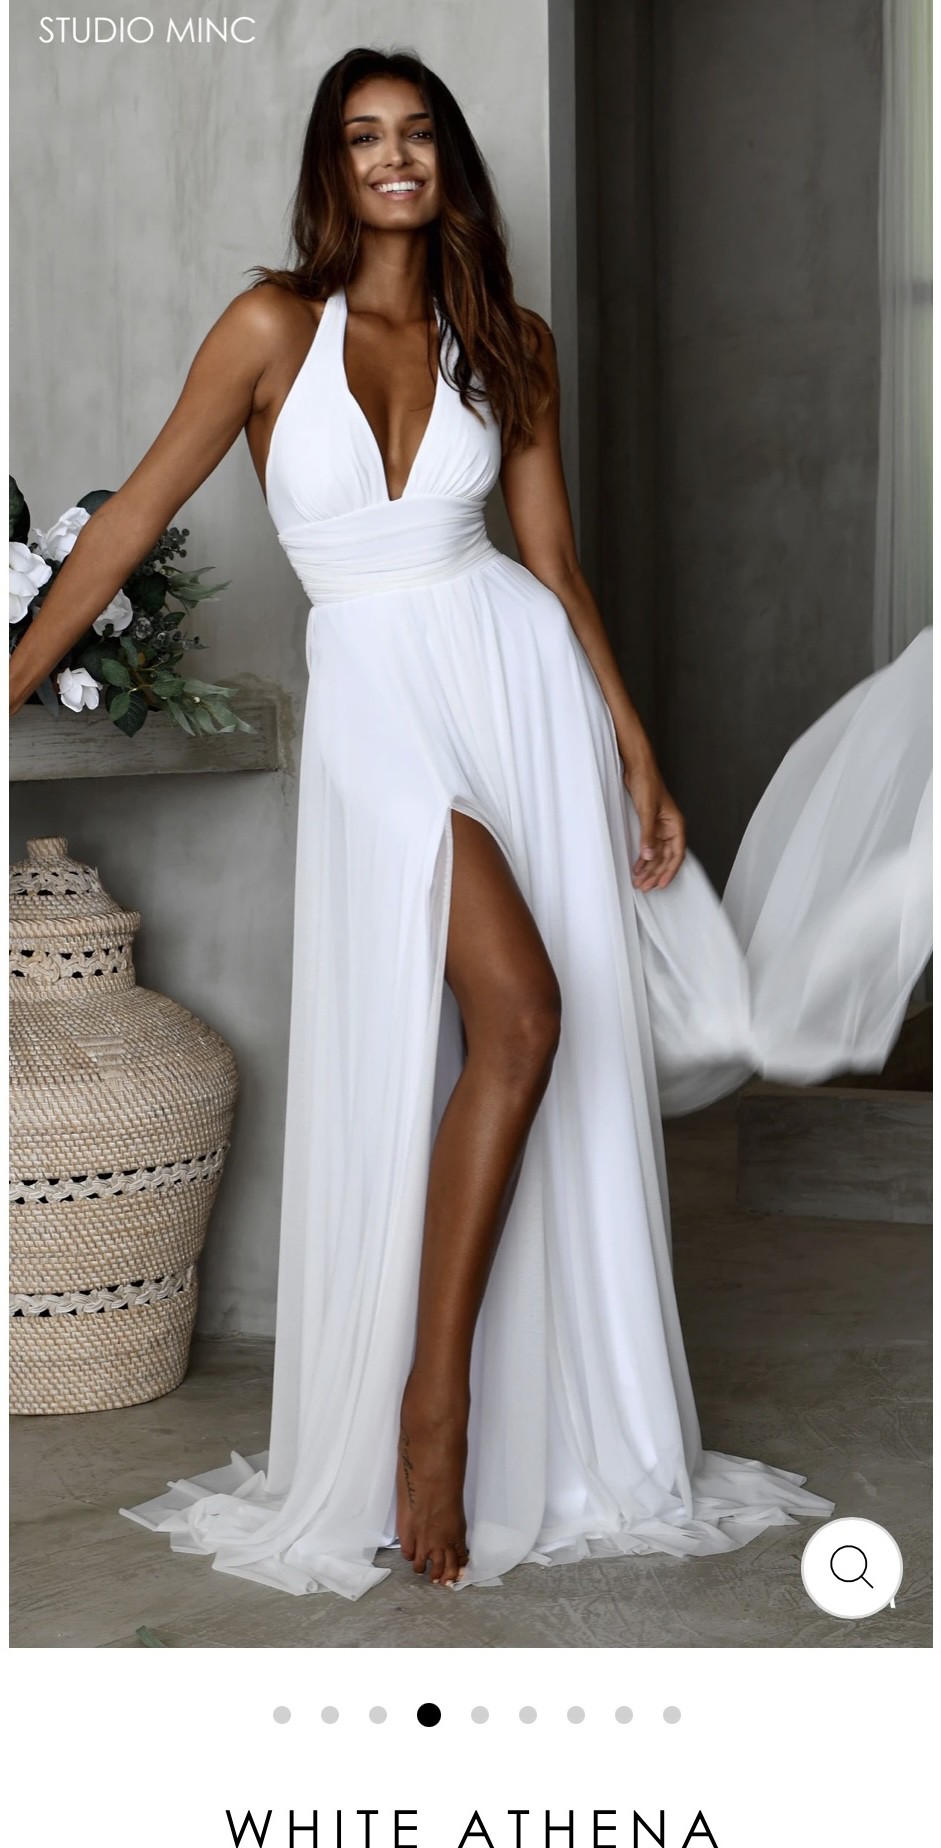 Studio Minc Athena New Wedding Dress Save 56% - Stillwhite